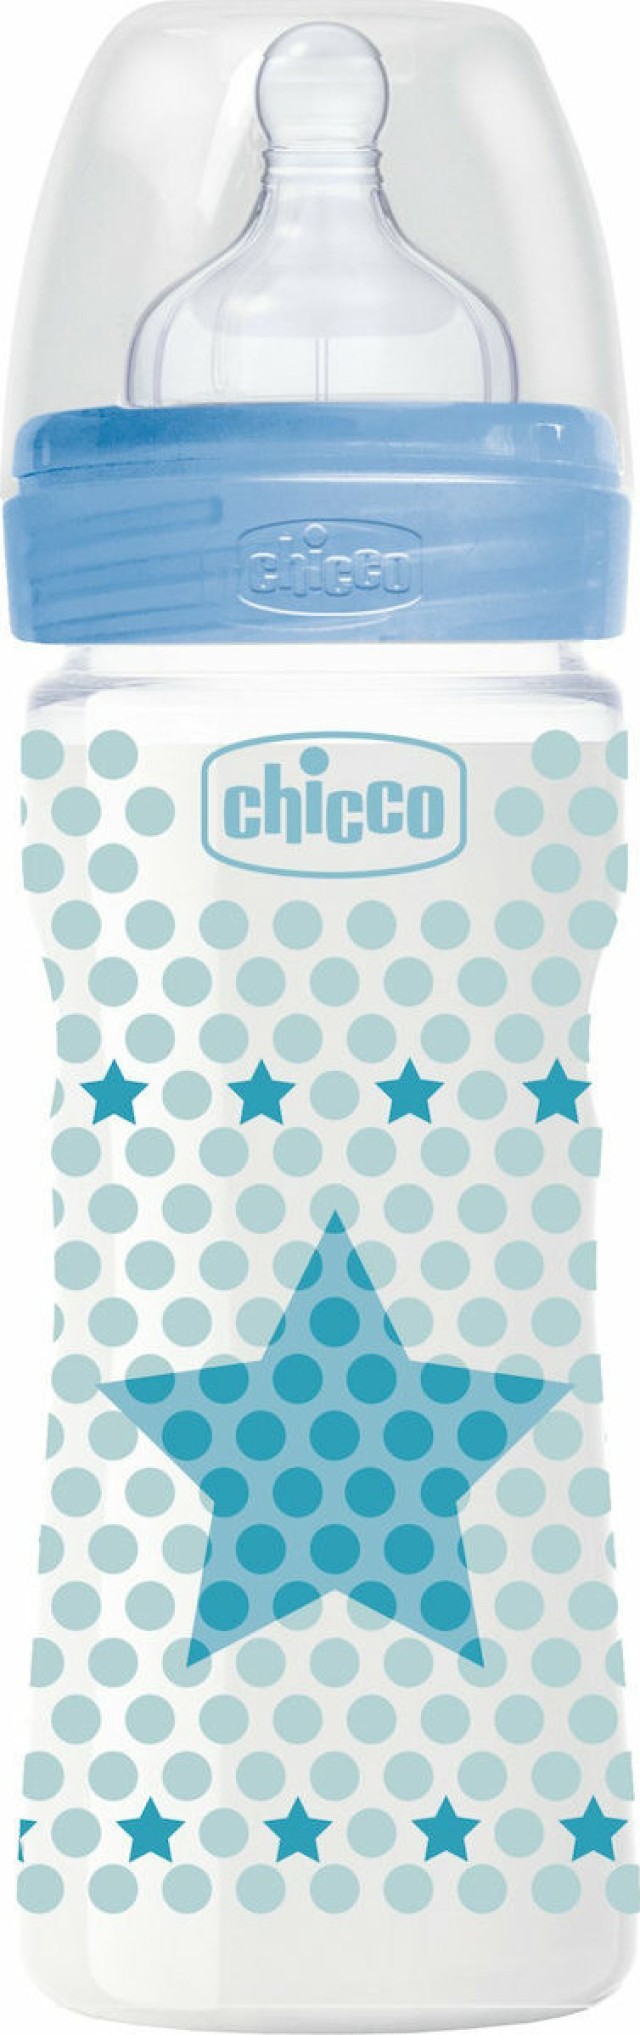 CHICCO Μπιμπερό Πλαστικό Well Being Mε Θηλή Σιλικόνης 2+m Κανονική Ροή Σε Χρώμα Μπλε, 250ml